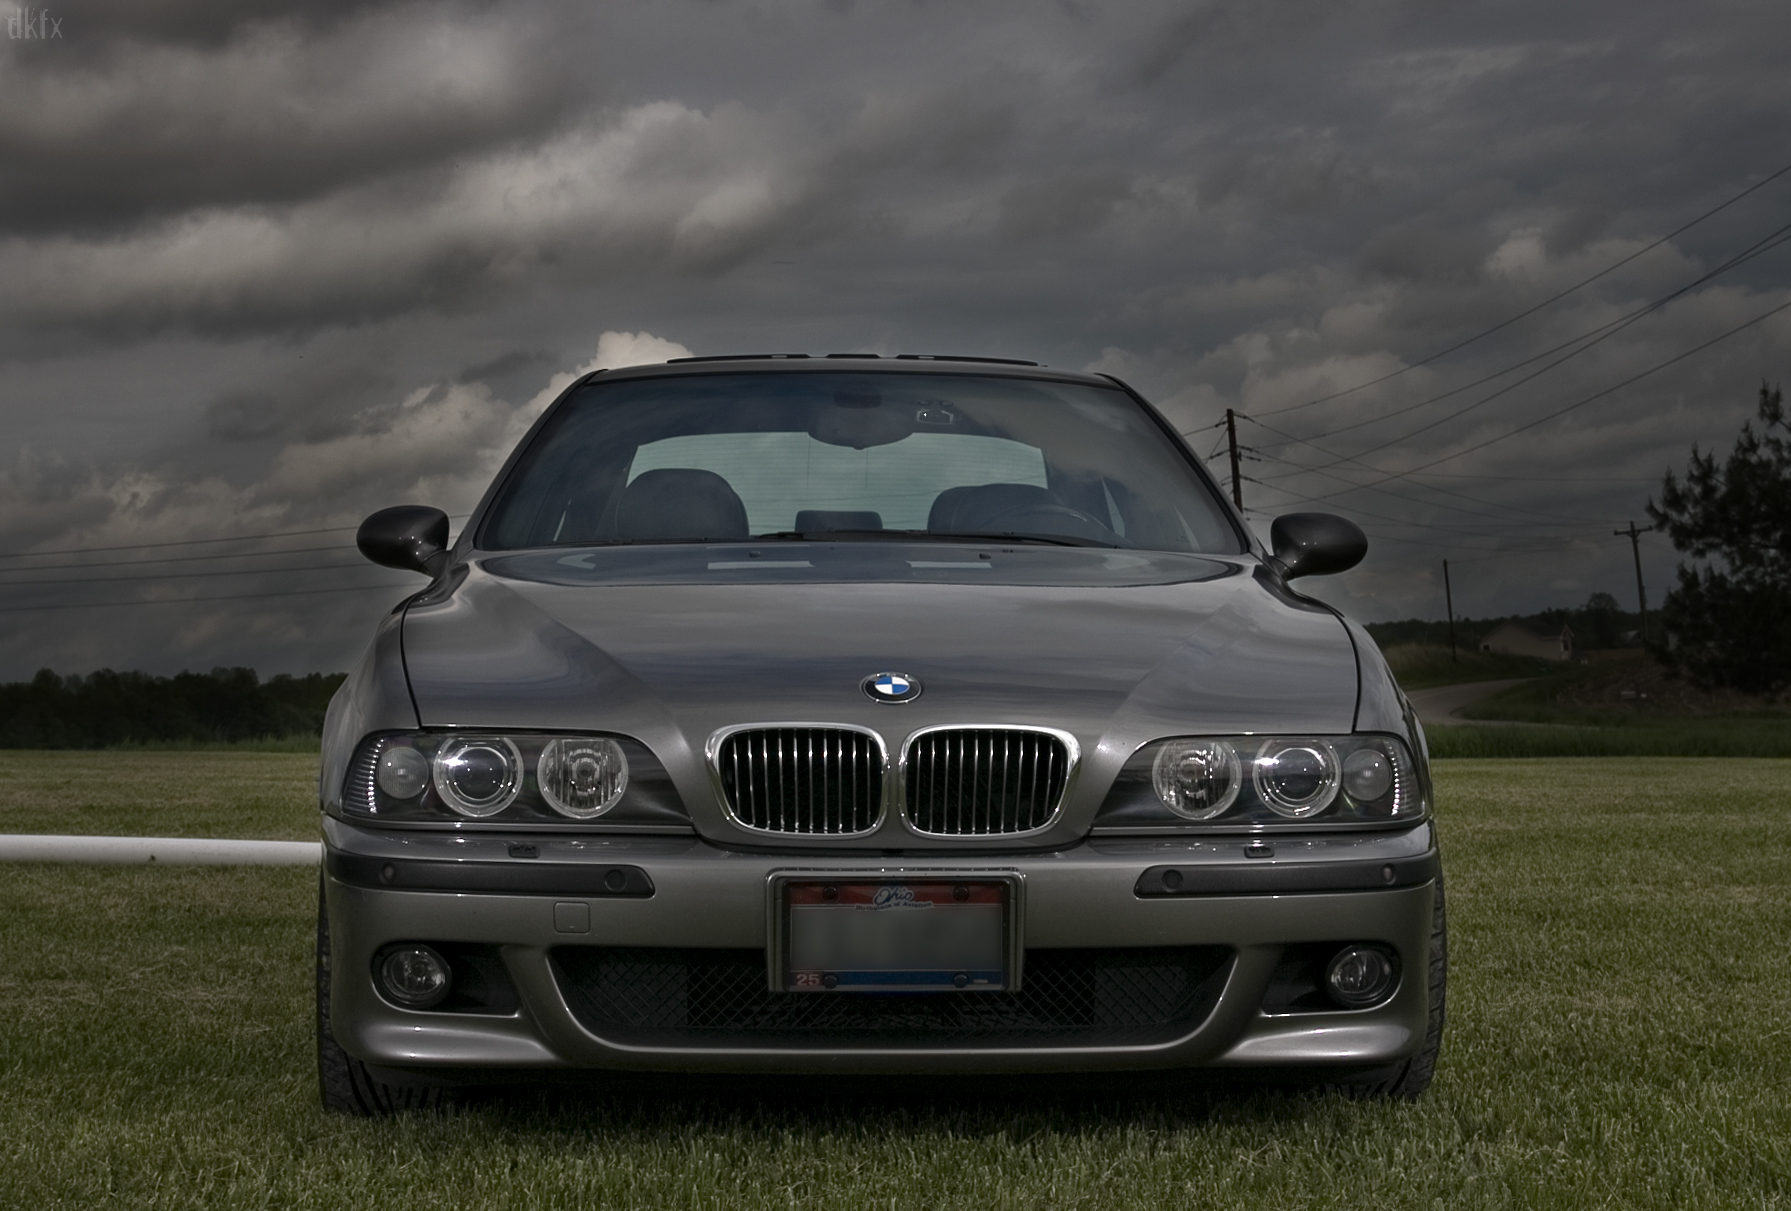 File:BMW M5 (2002) - Flickr - The Car Spy (14).jpg - Wikimedia Commons